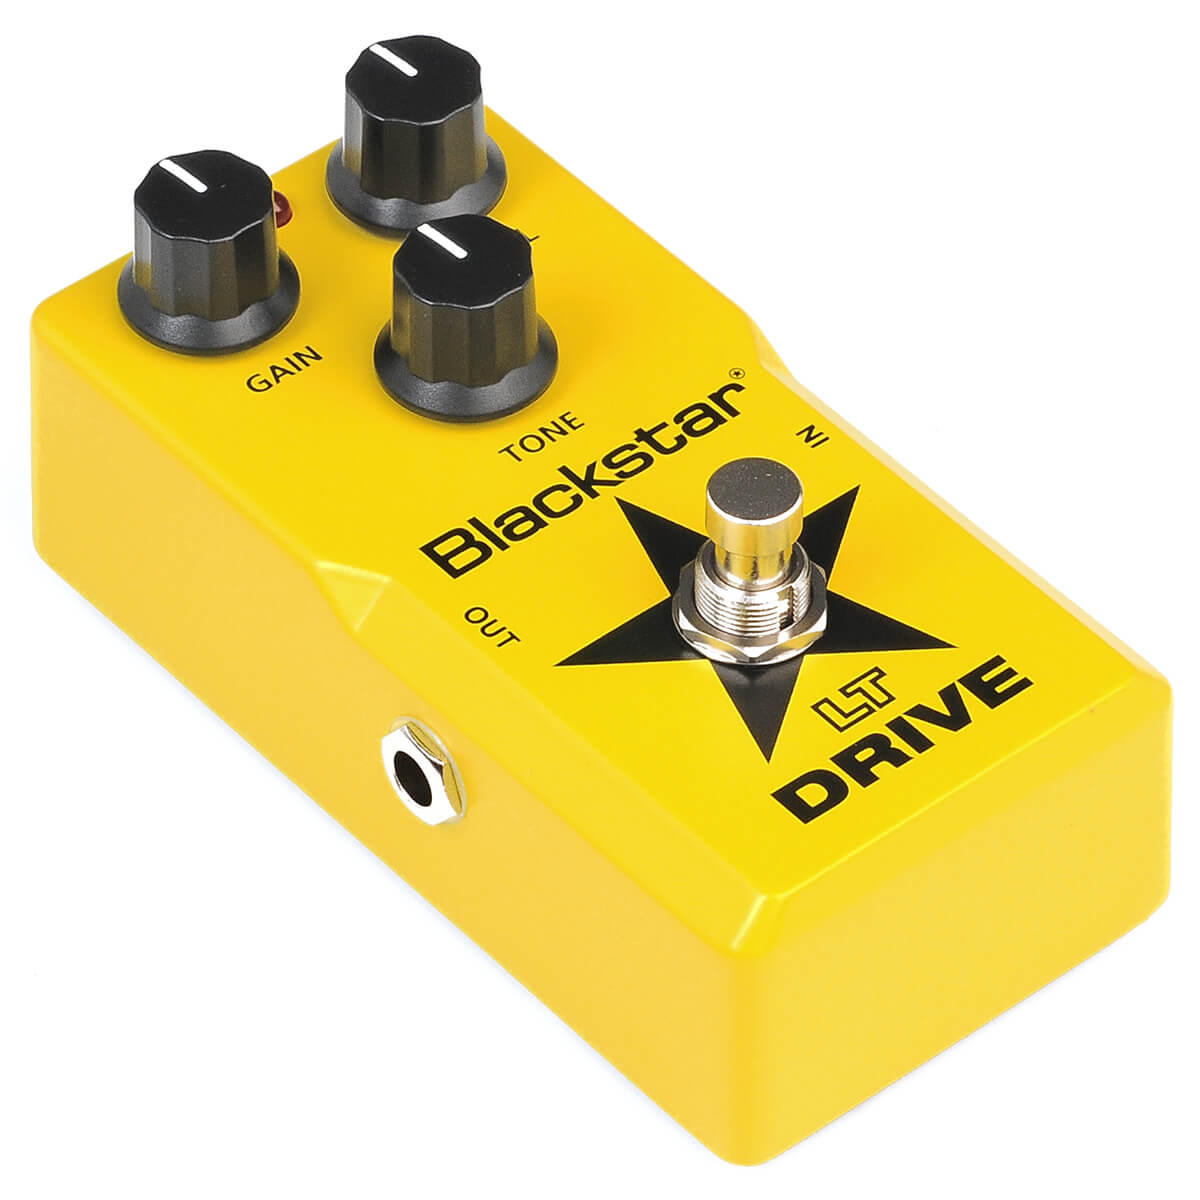 Blackstar LT Drive Guitar Effects Pedal